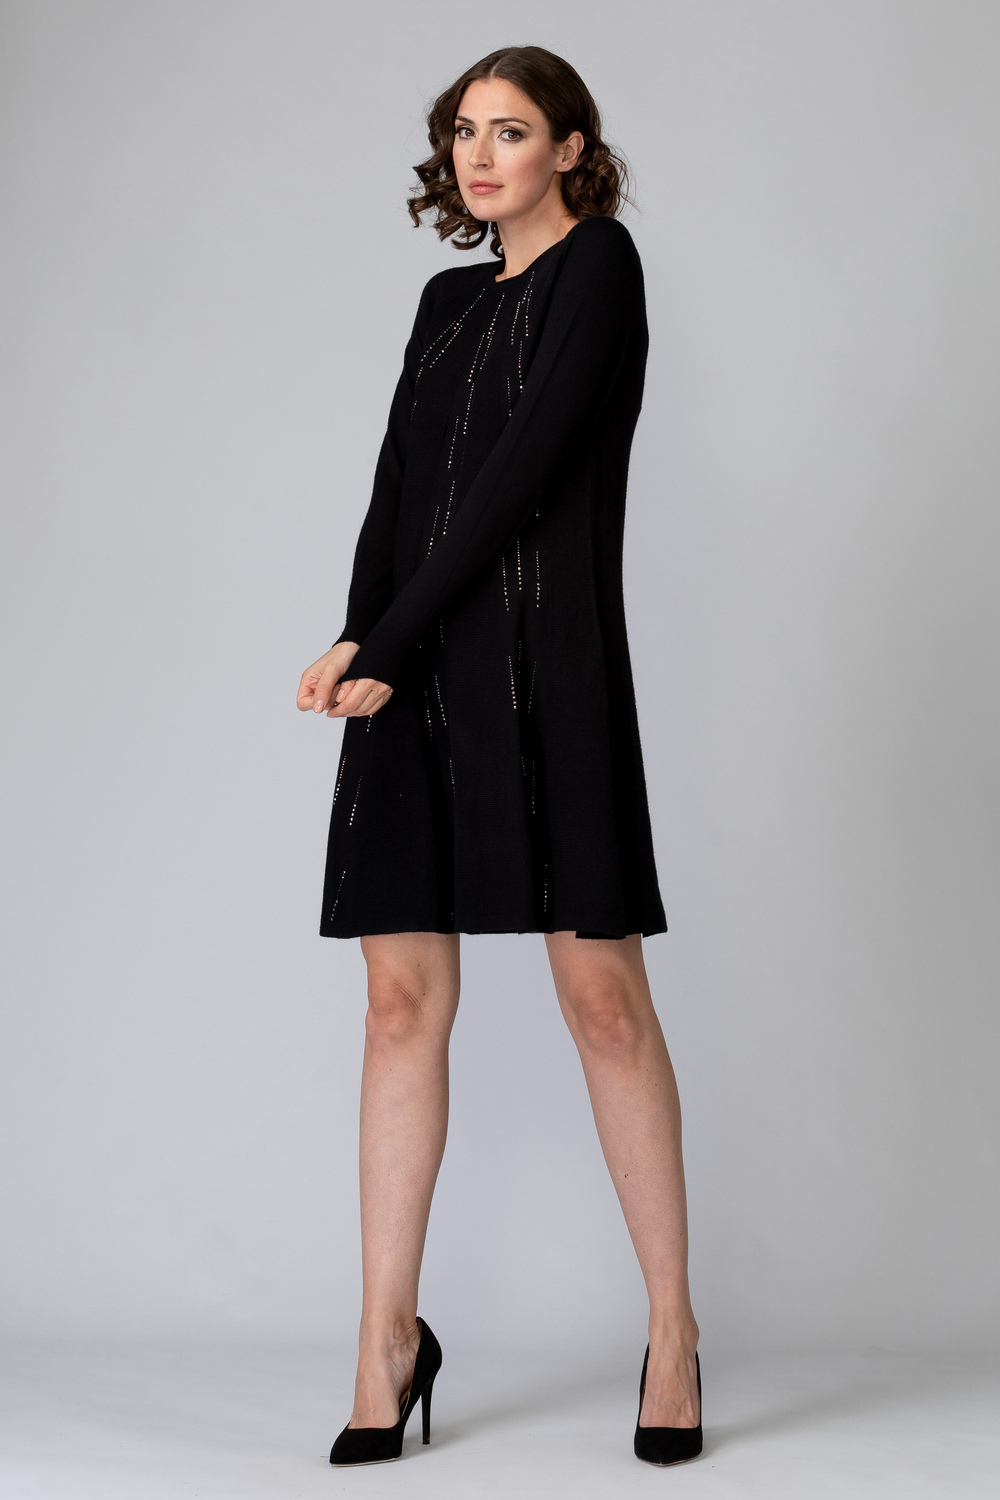 Joseph Ribkoff Dress Style 194901X. Black